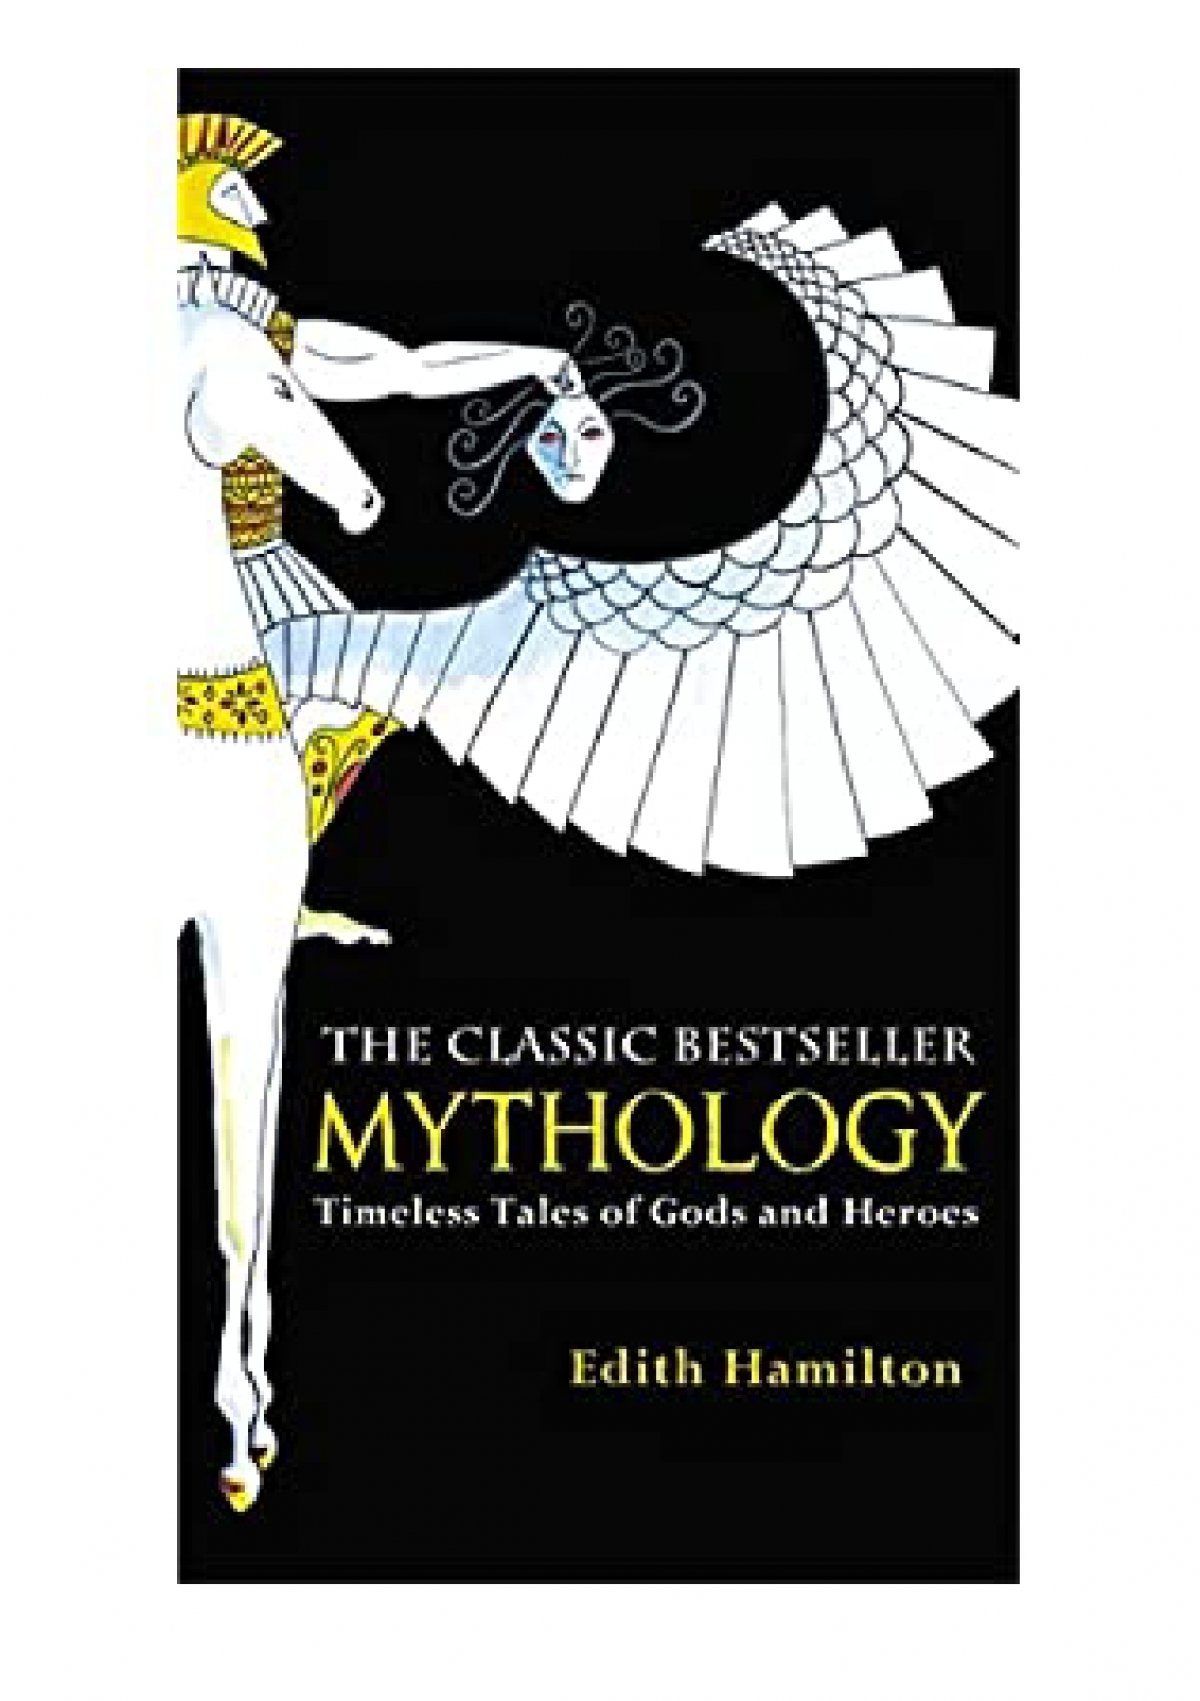 mythology edith hamilton 75th anniversary pdf free download